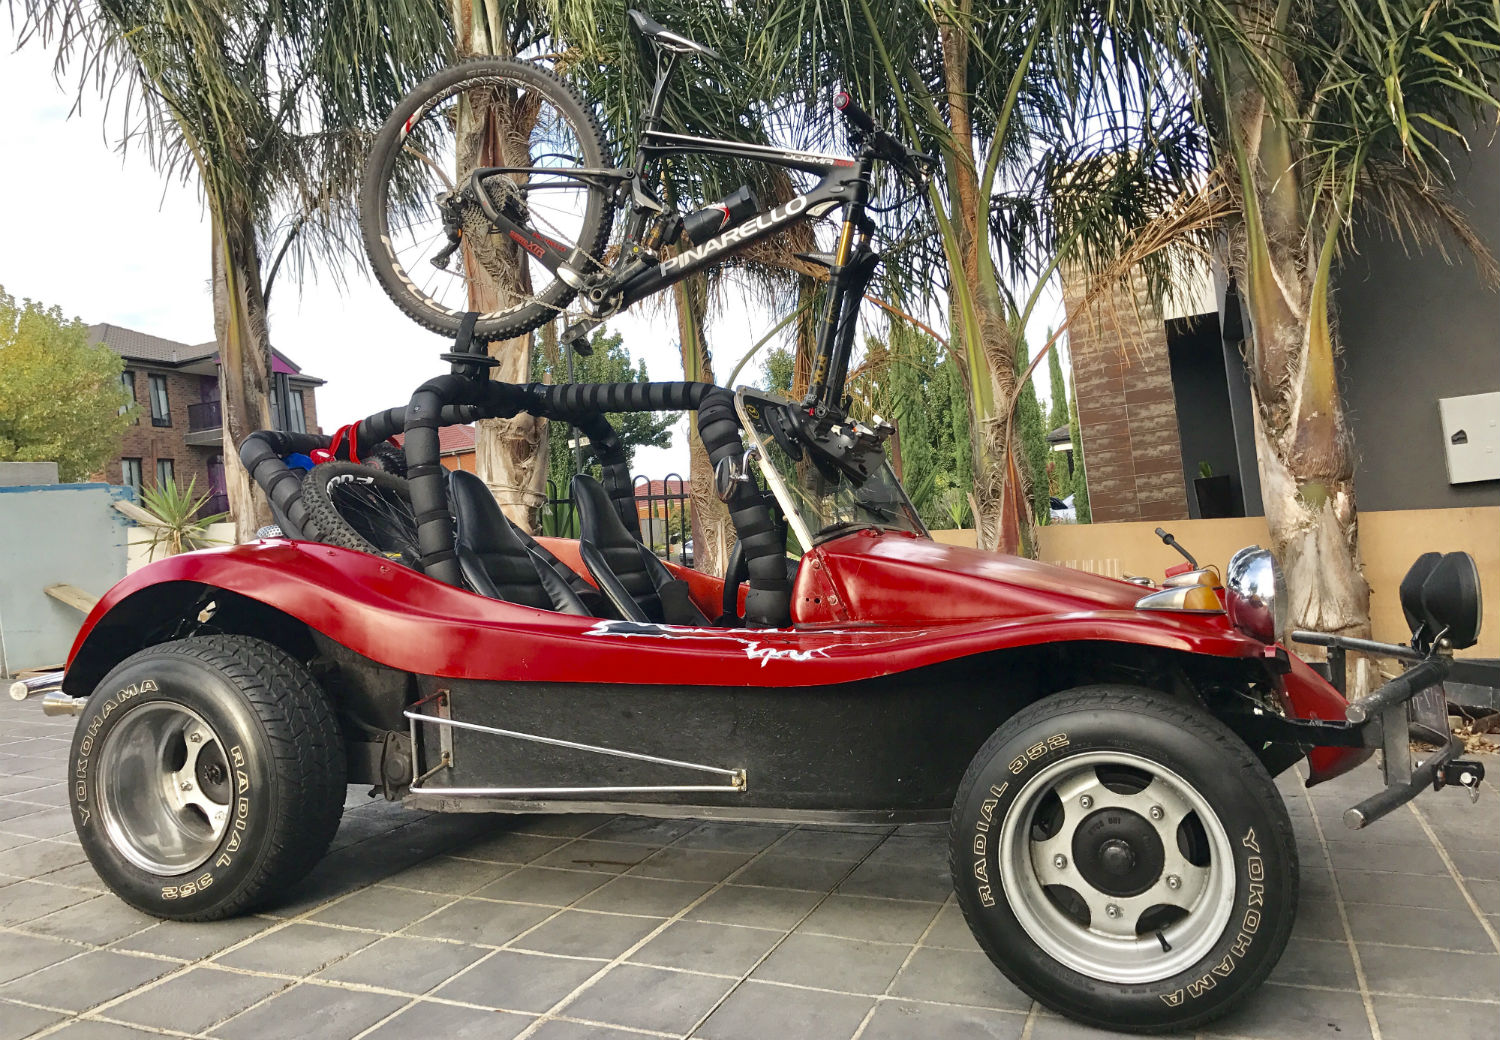 VW Dune Buggy Bike Rack - The SeaSucker Mini Bomber